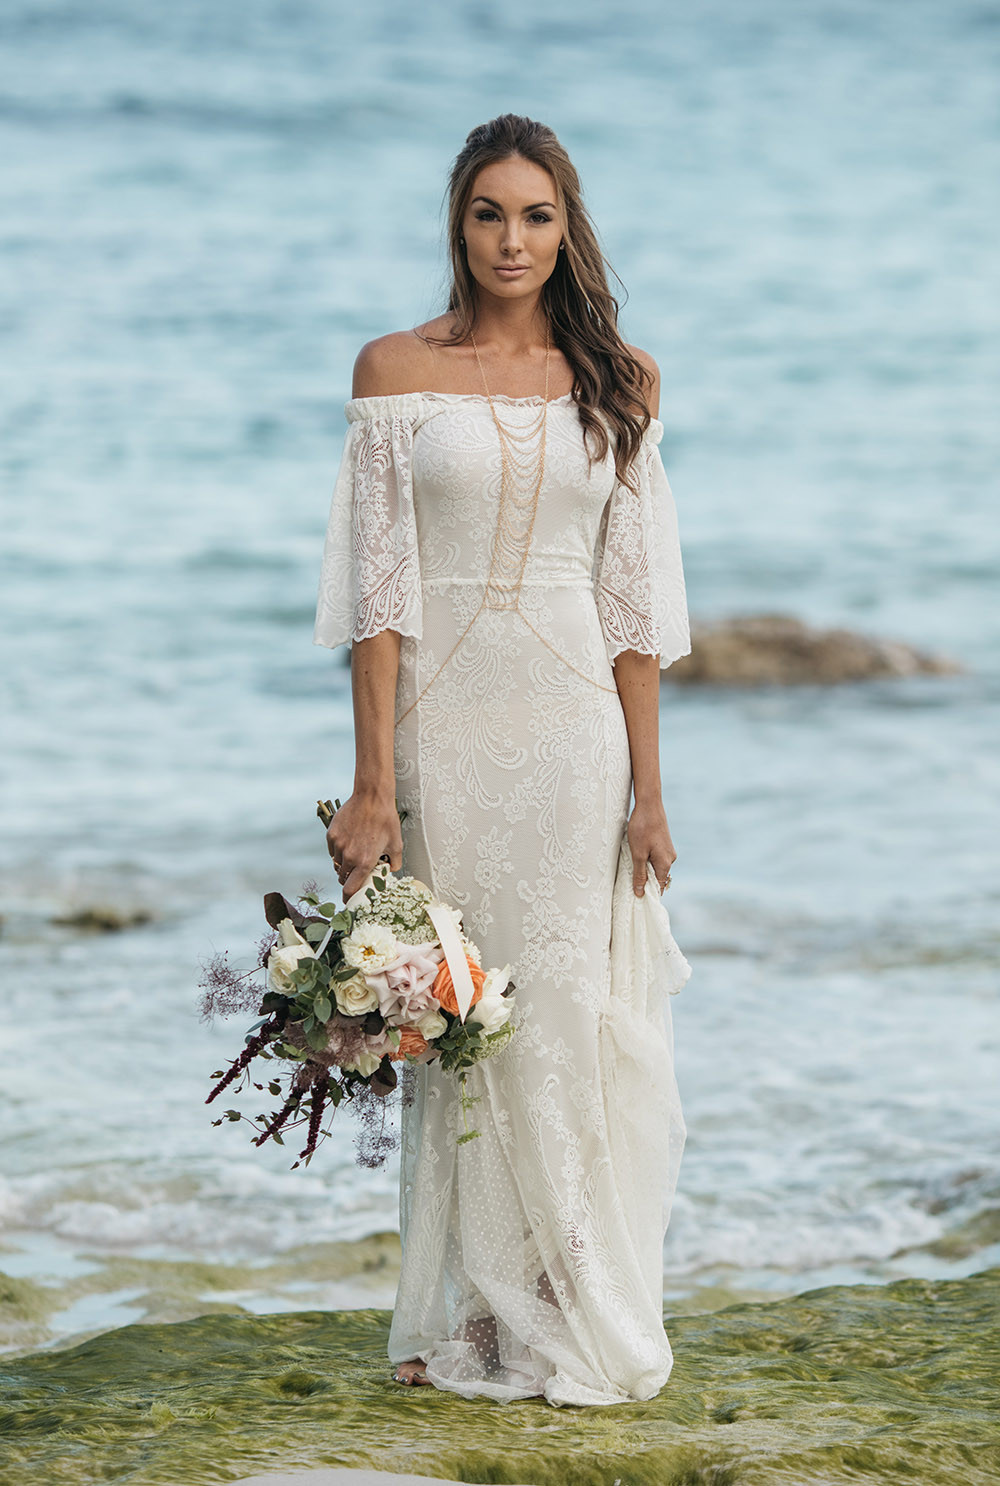 Boho Beach Wedding Dress
 Tips on Choosing Beach Wedding Dresses for Destination